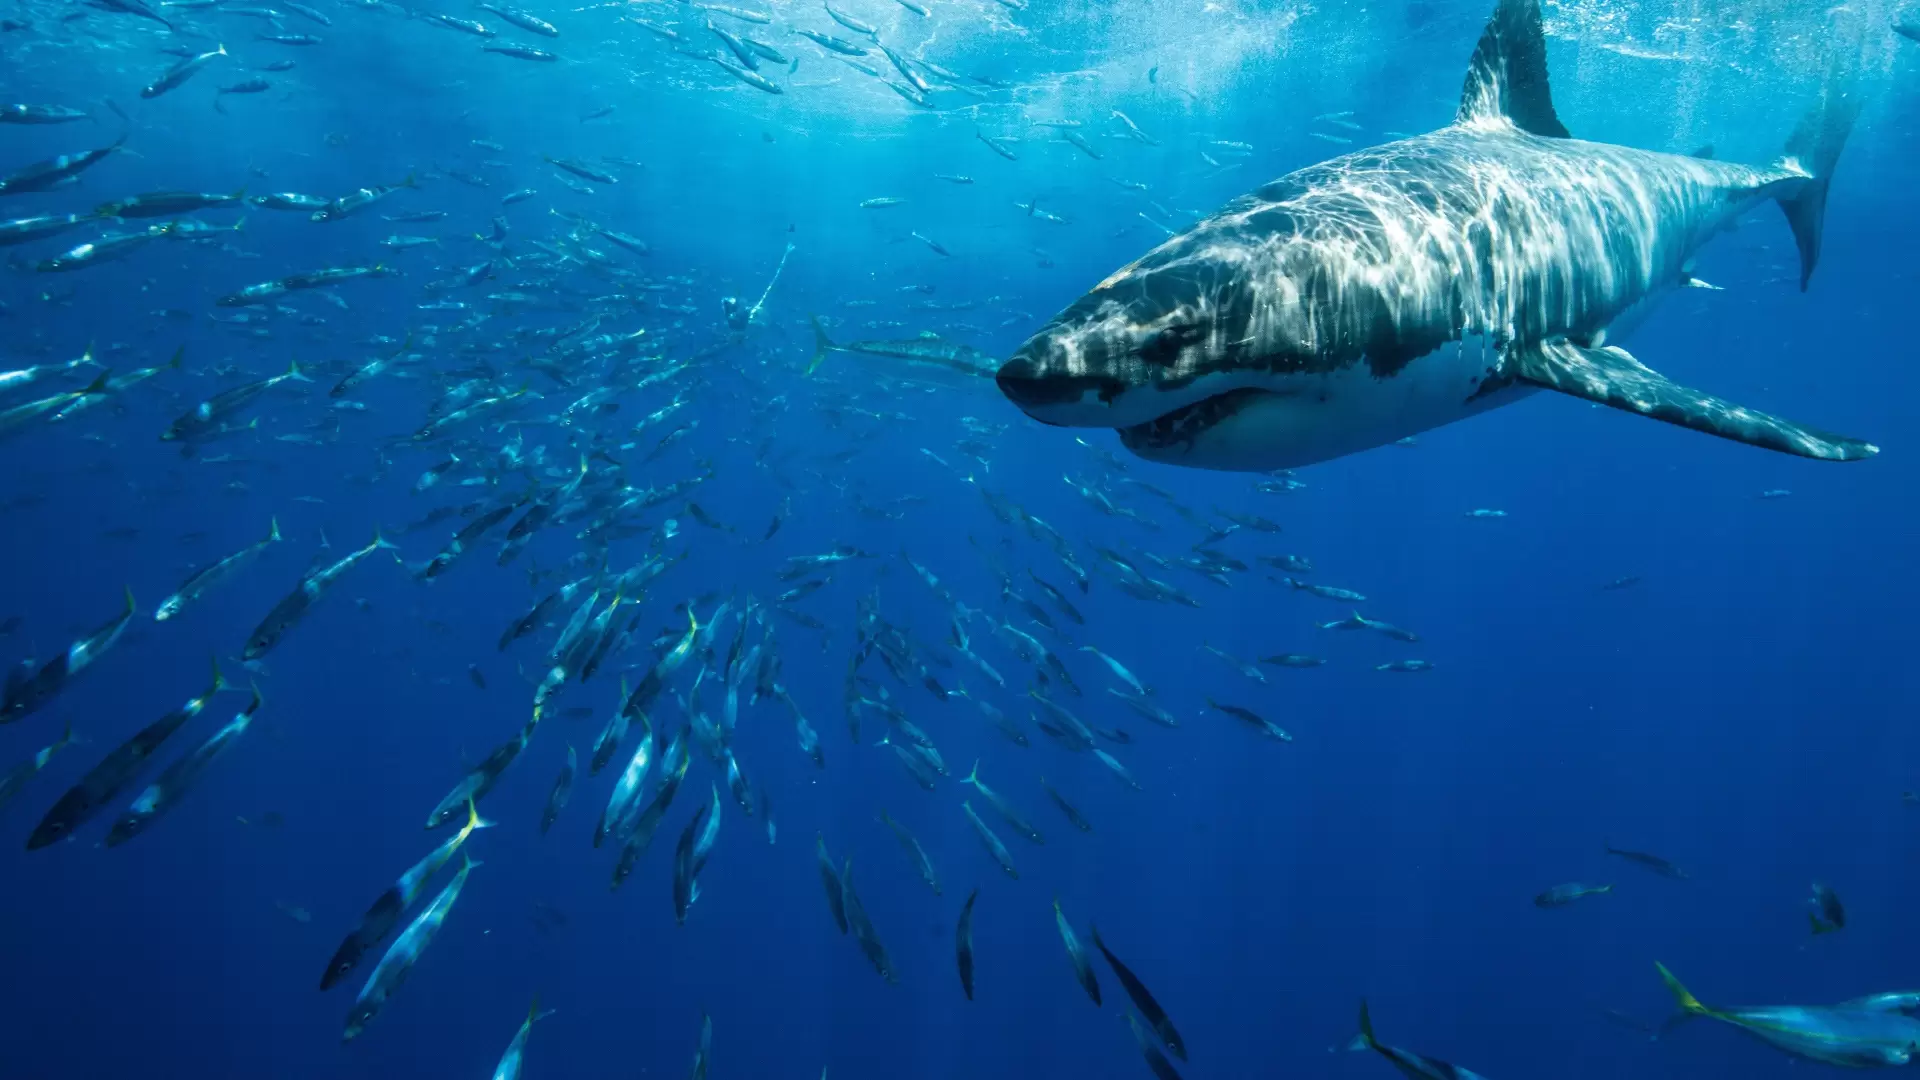 В океане акул сопровождают рыбы лоцманы